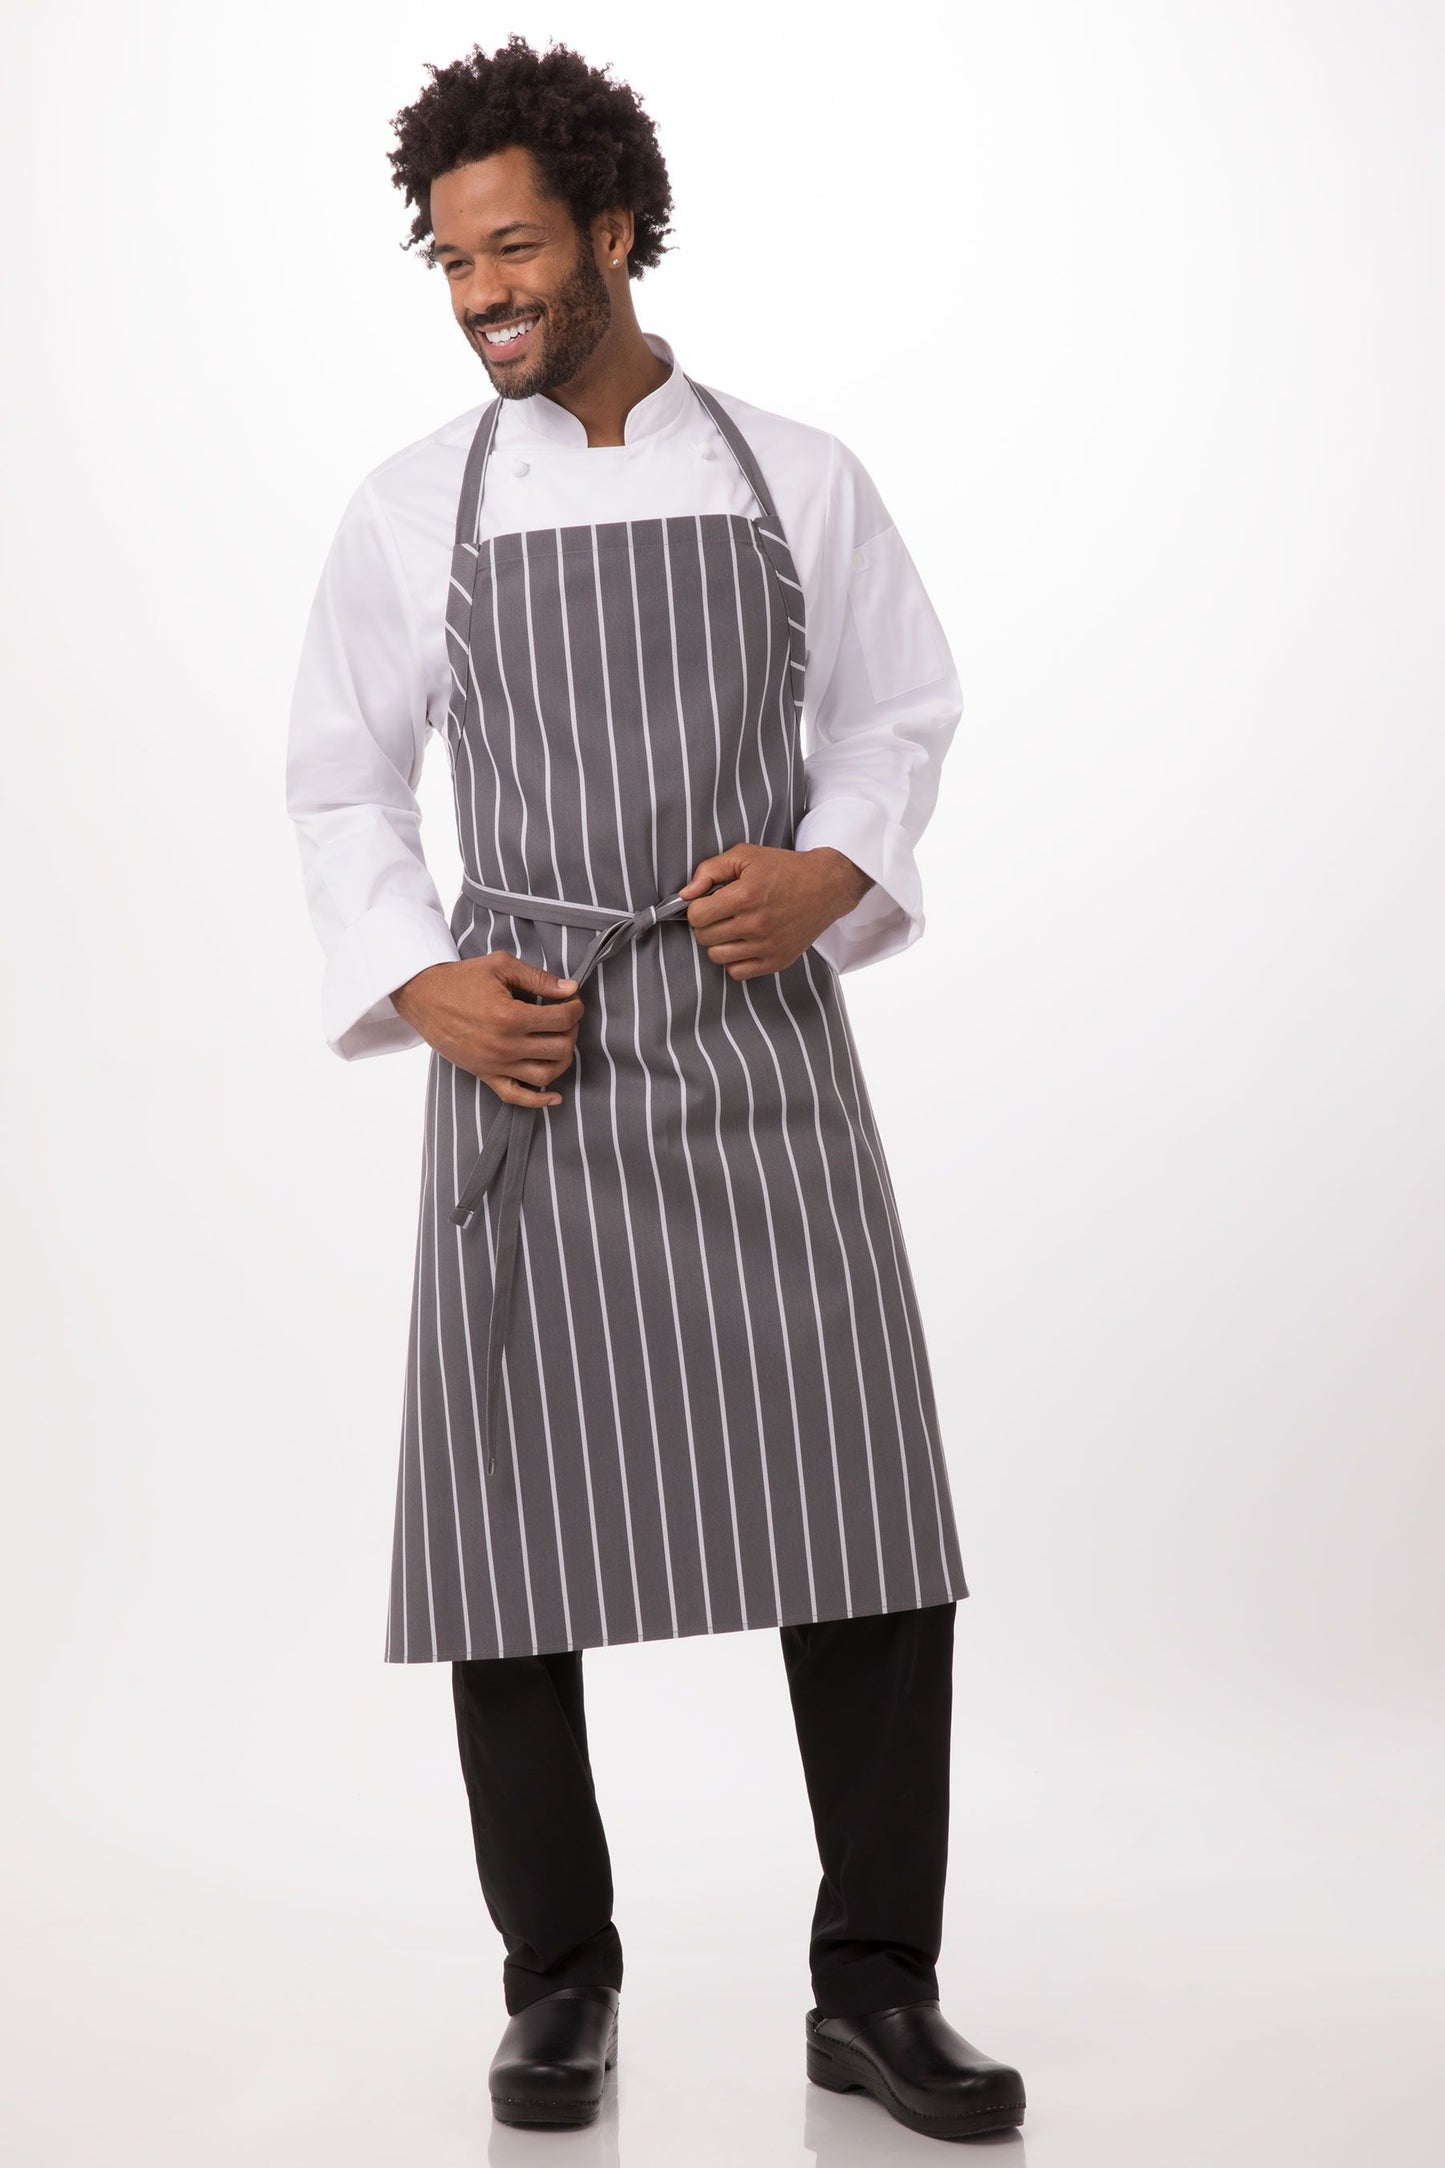 English Chef Apron, Grey with White Stripes